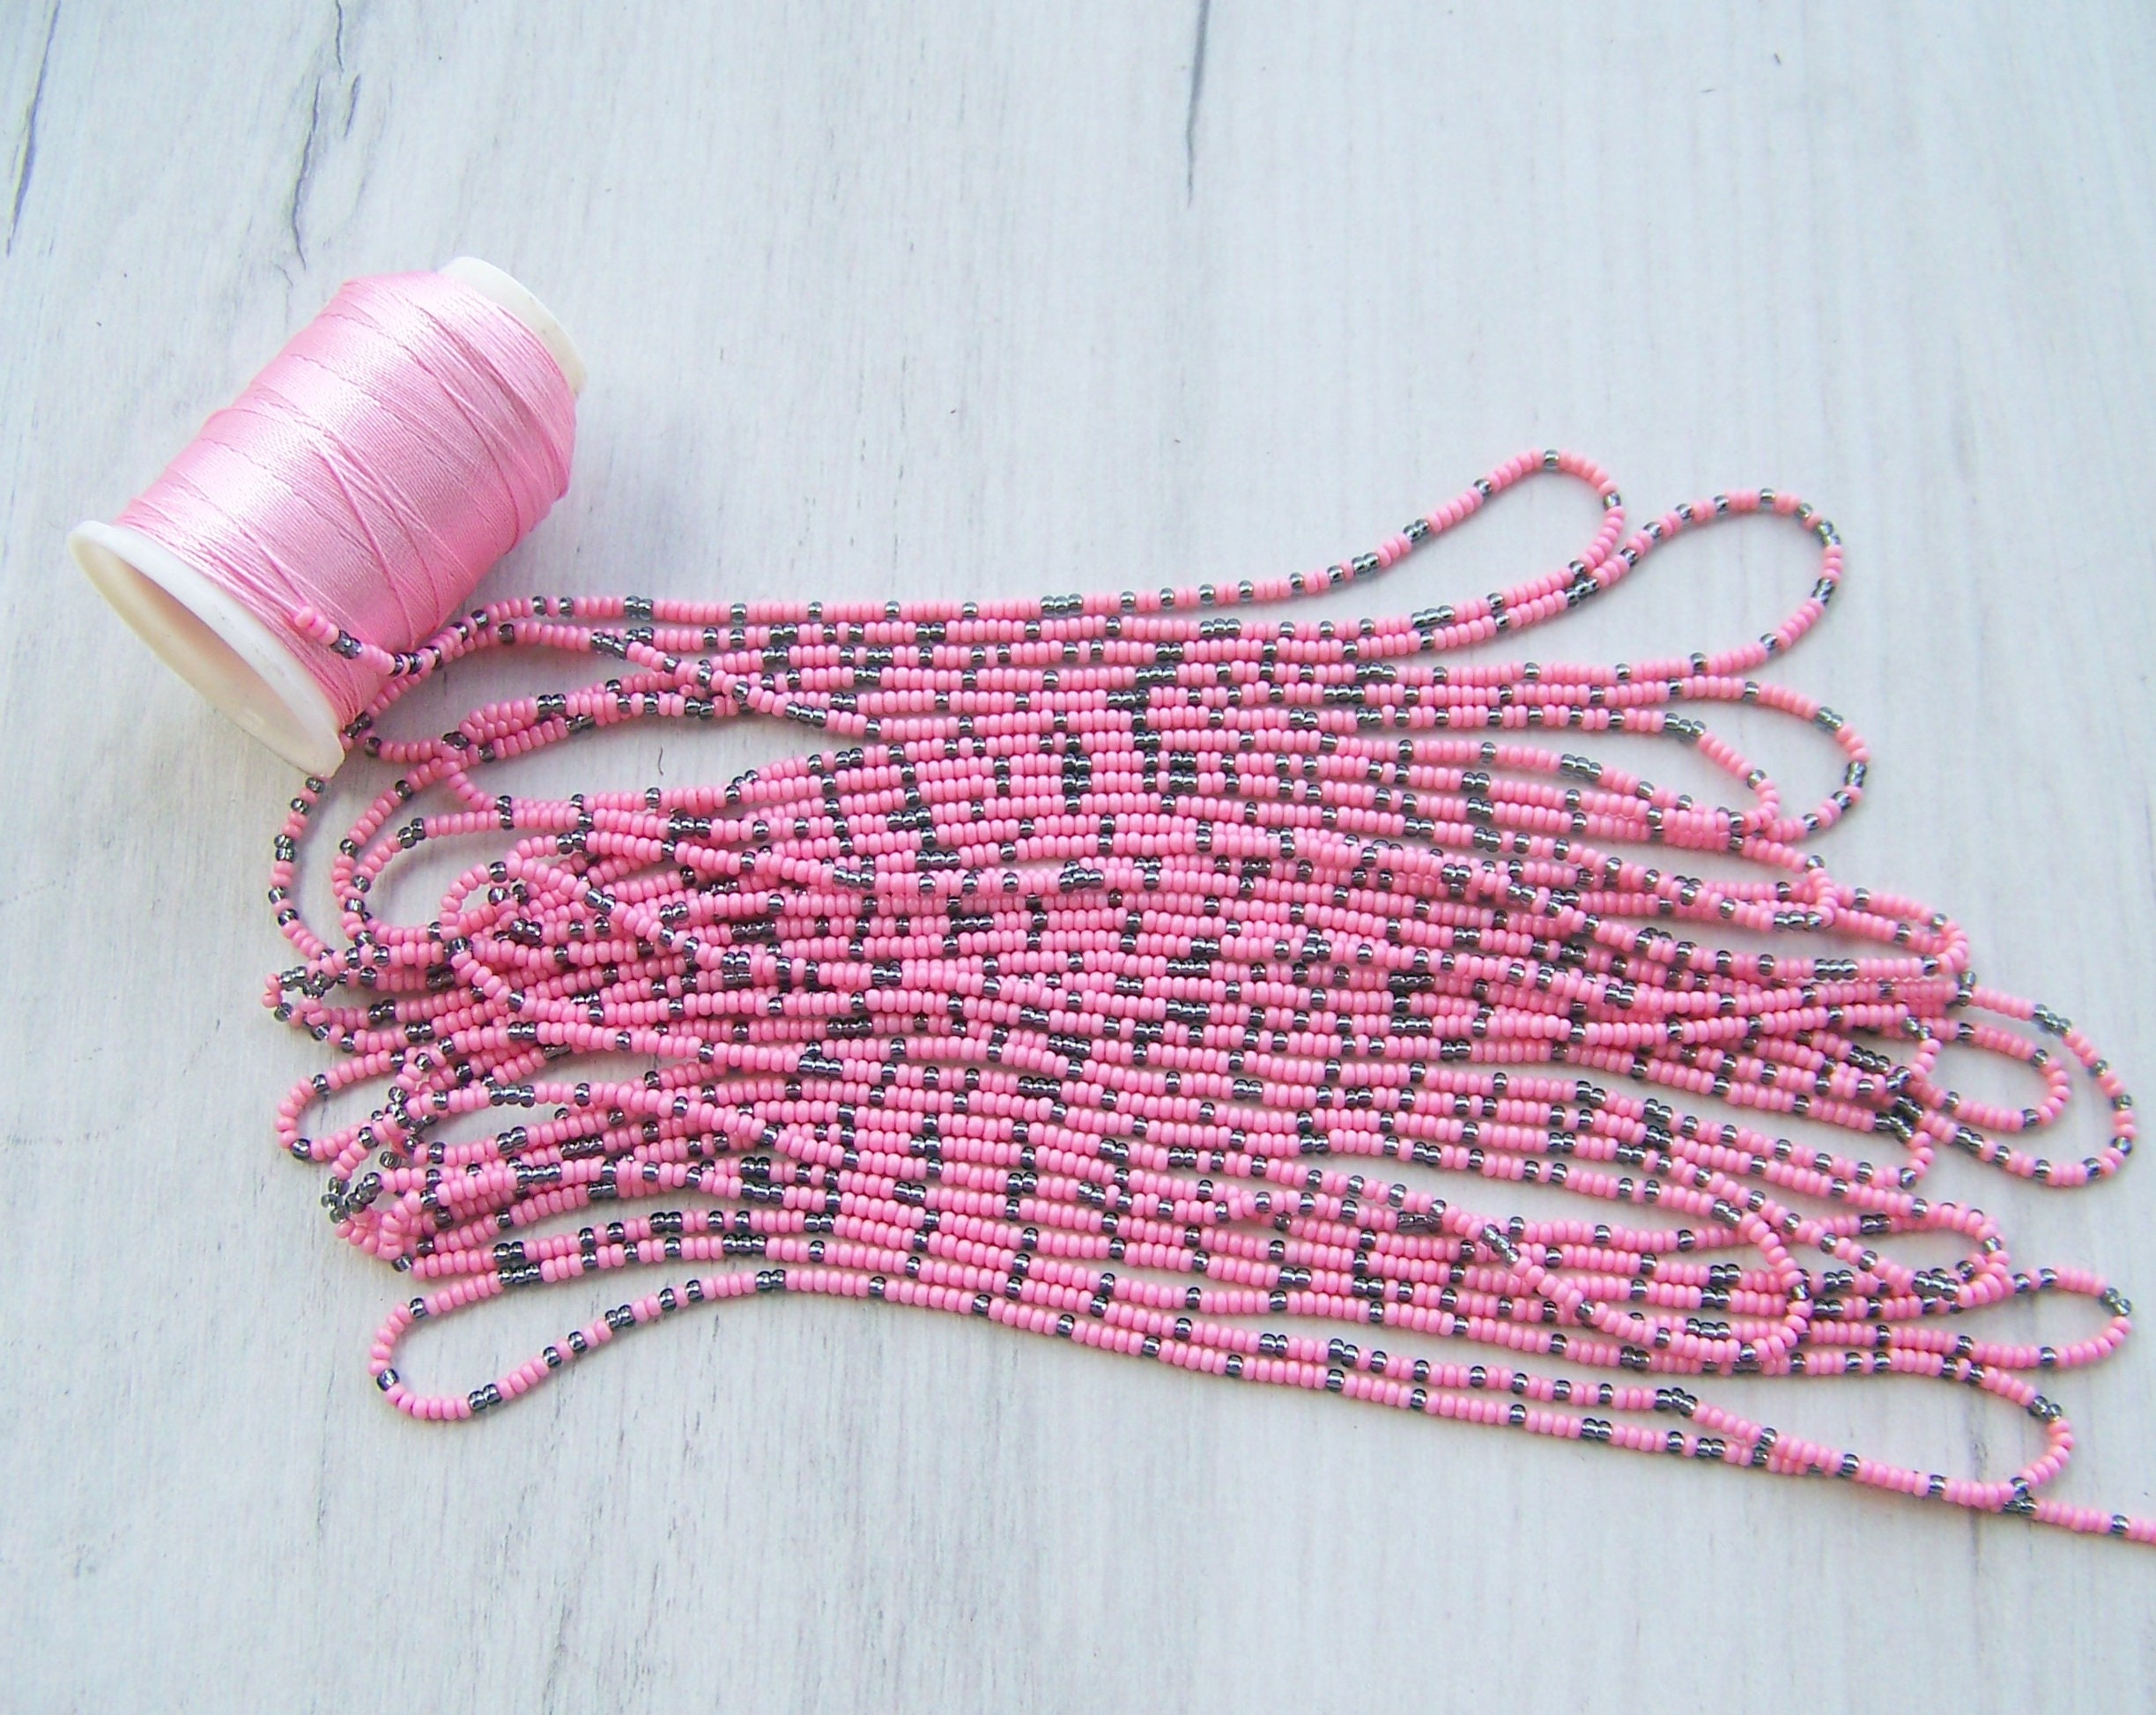 Bead Crochet Necklace Kit Jewelry Making Kit Bead Crochet | Etsy